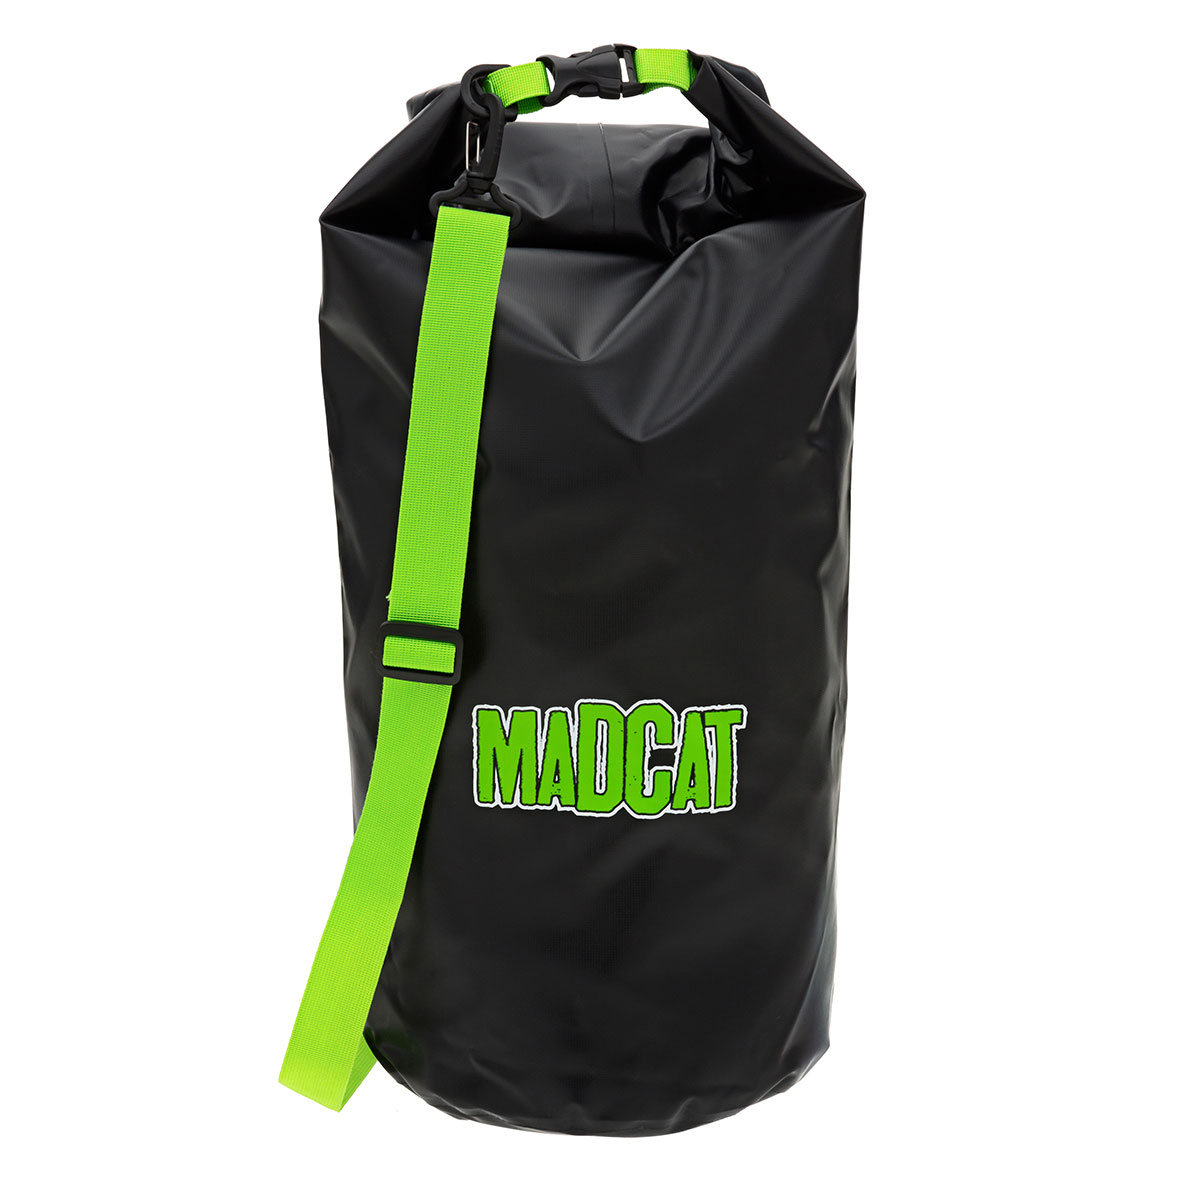 MADCAT Waterproof Bag 25 L